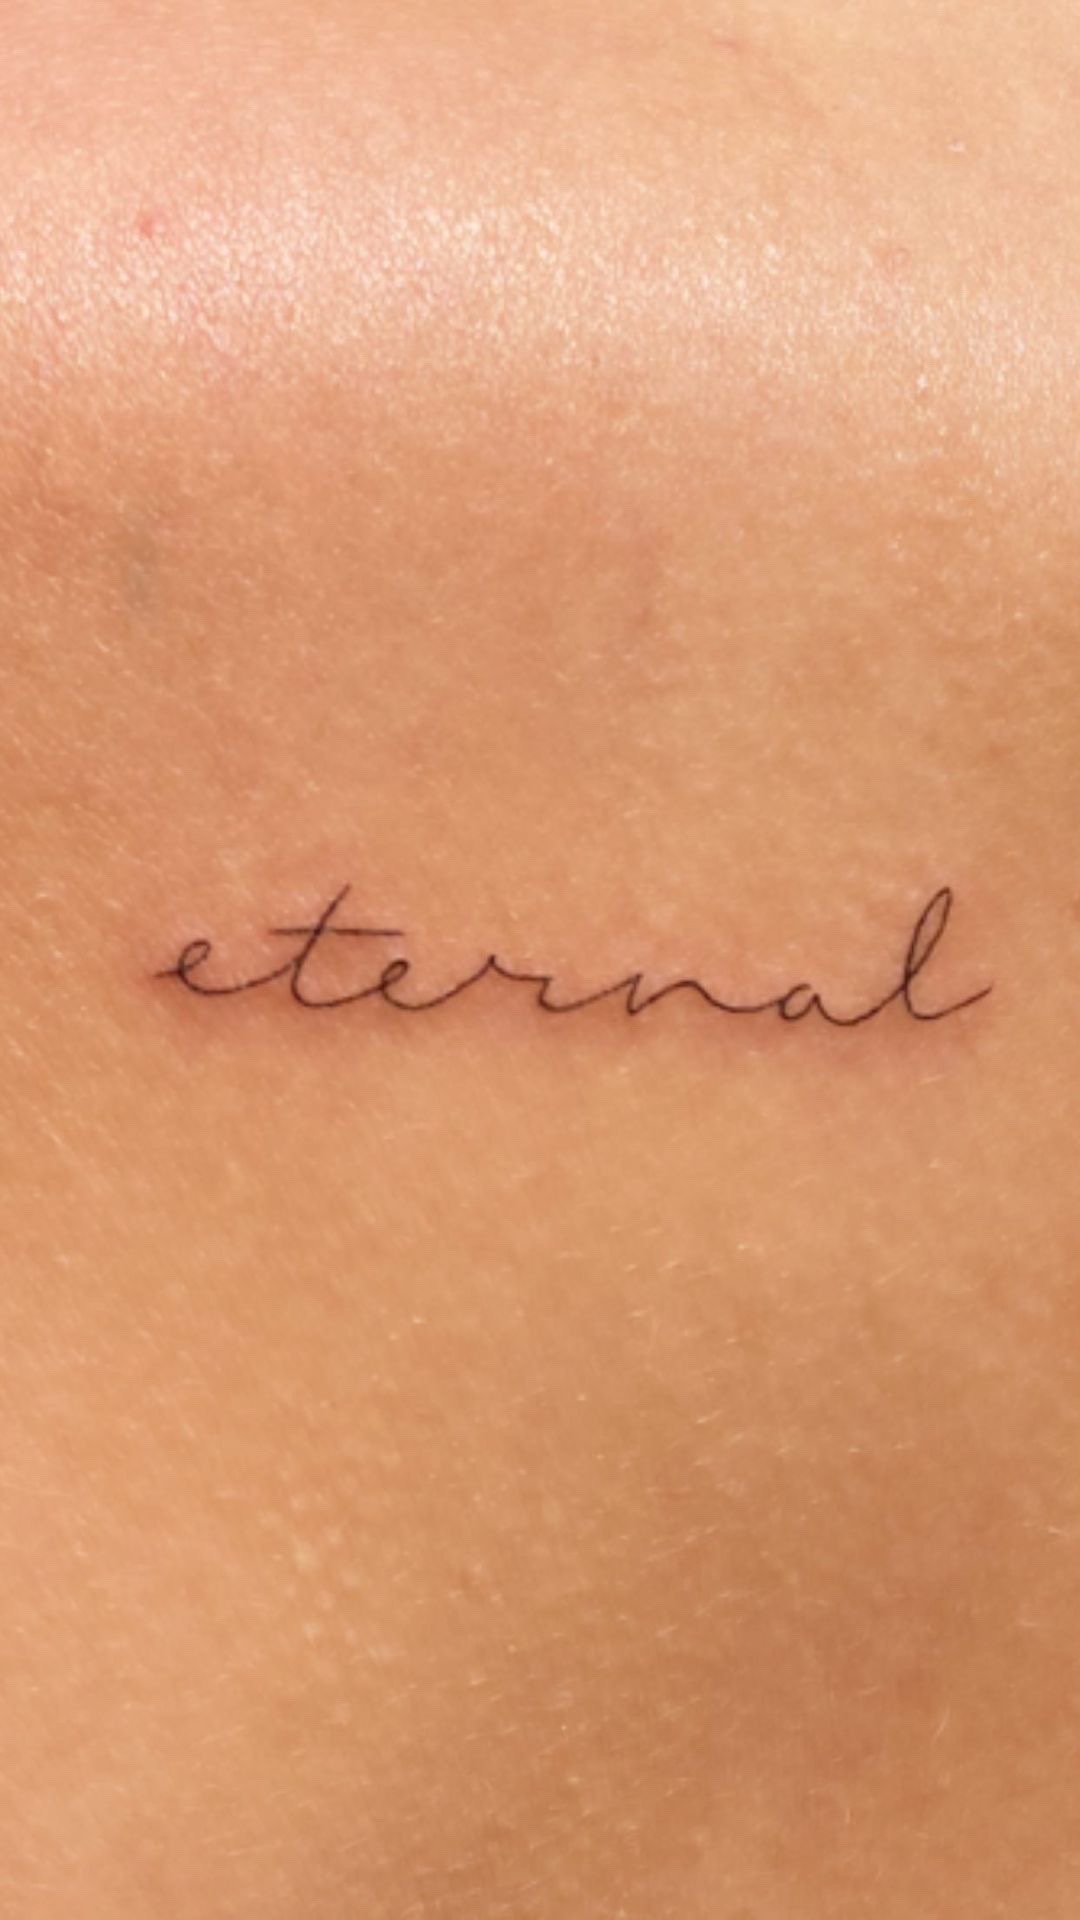 Eternal Tattoo  Omaha eternaltattooomaha  Instagram photos and videos